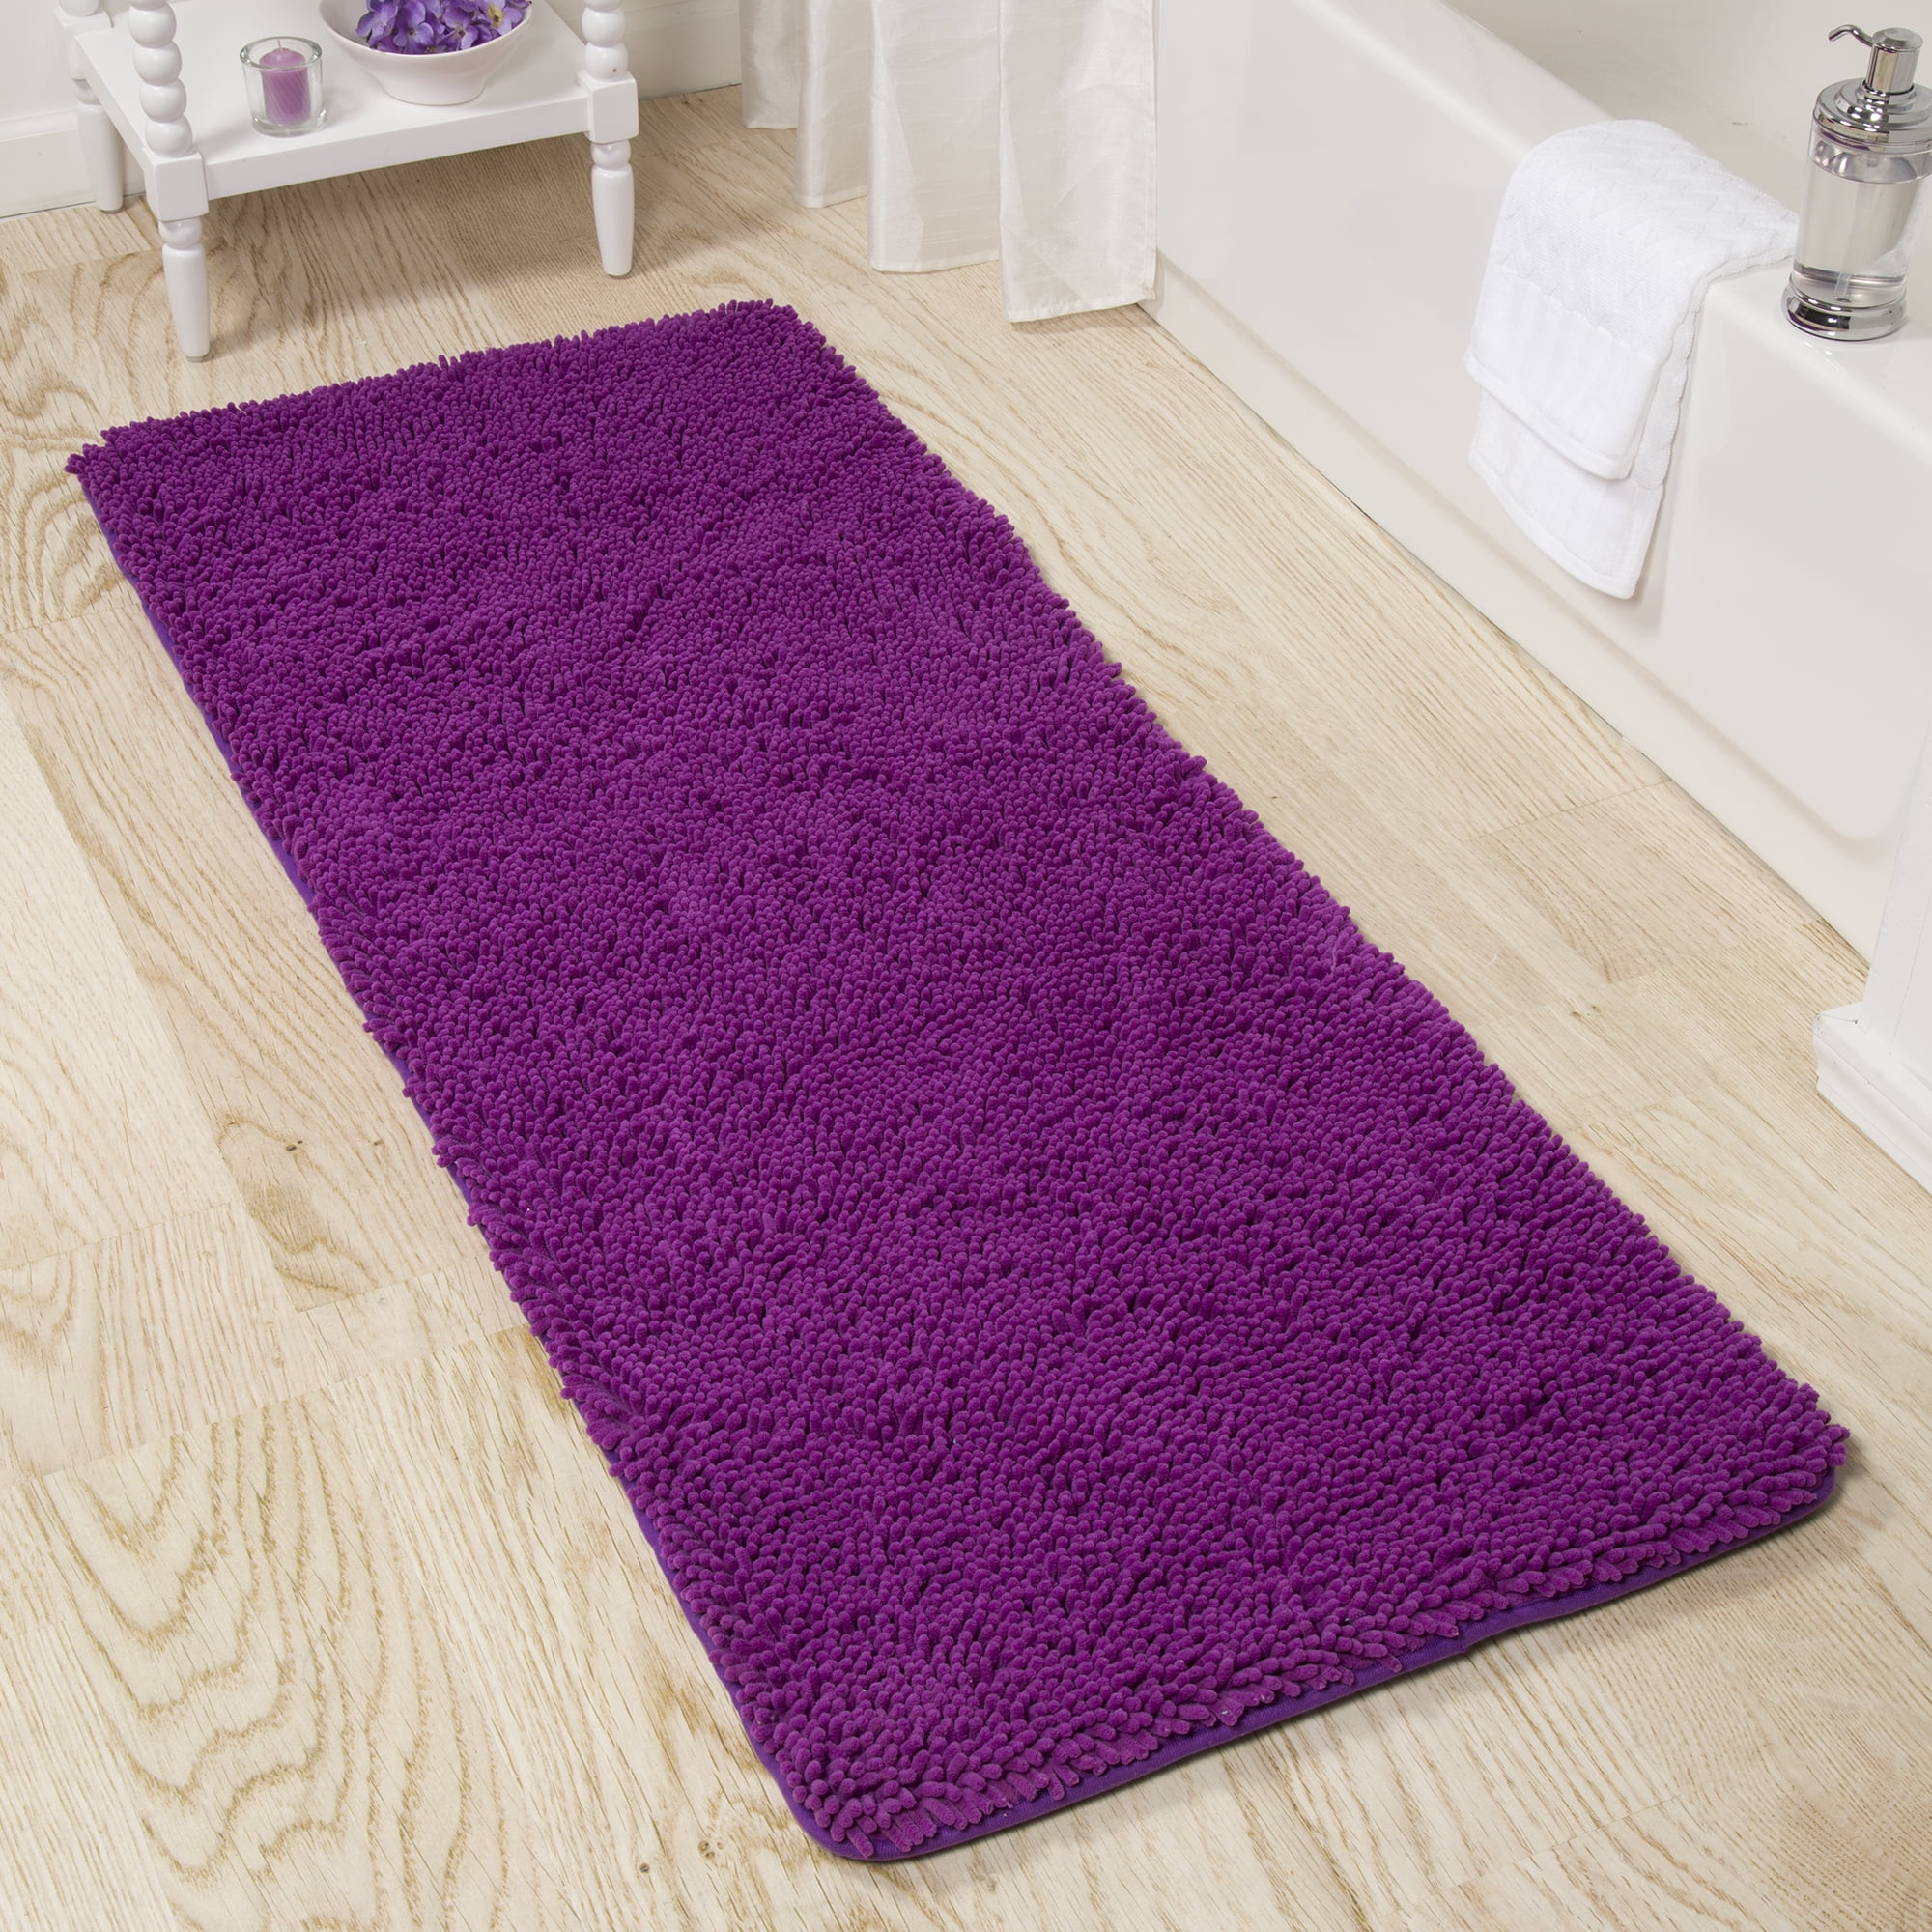 LMSM Lavender Bathroom Rugs Purple Bath Mat Rugs Mat for Bathroom Decor, Non Slip Lavender Floral Sink Mats Absorbent Quick Drying Floor Mats